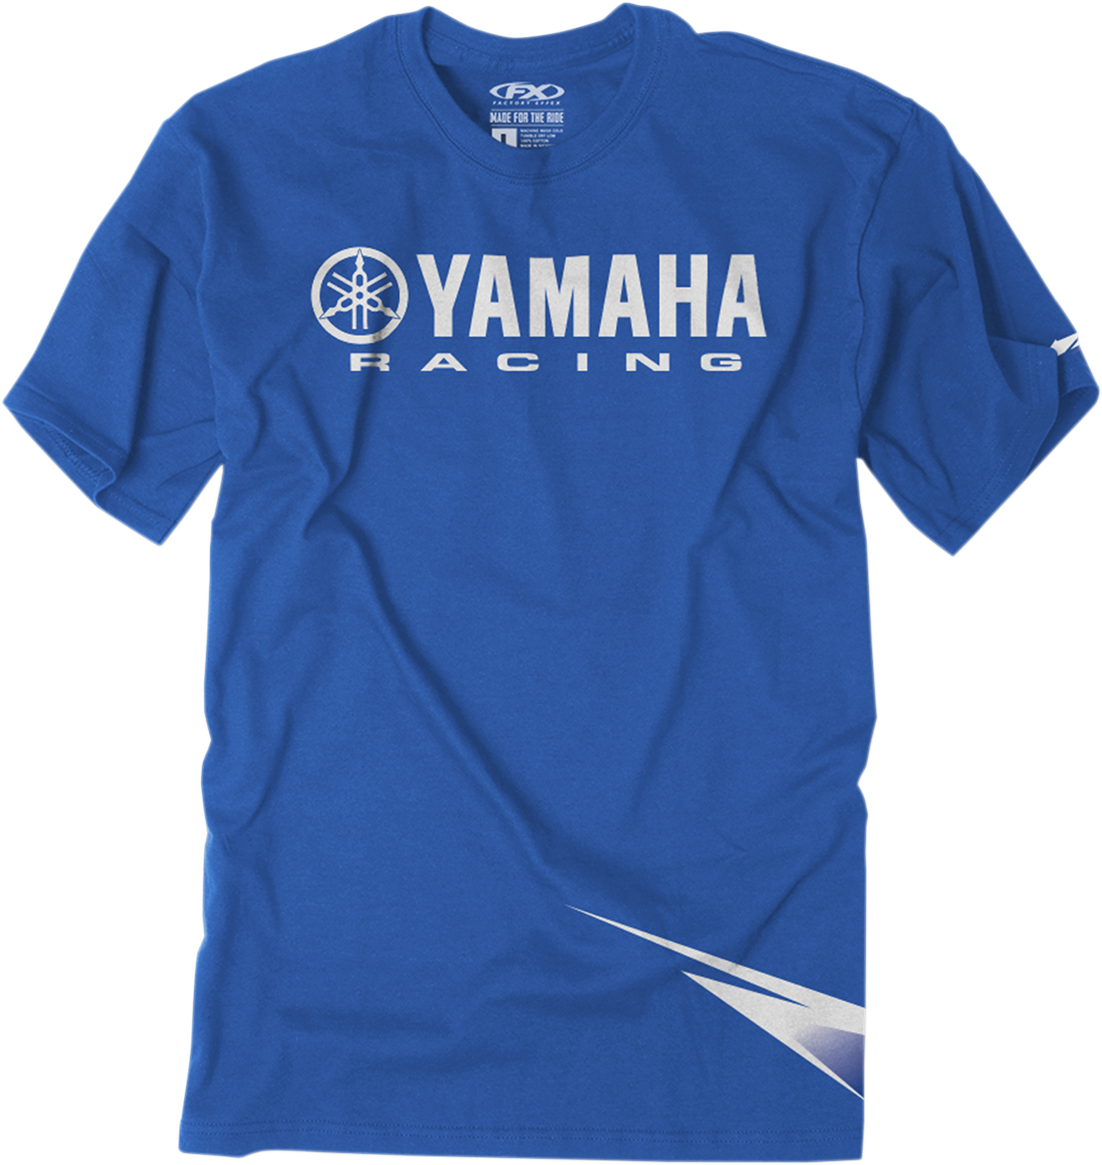 FACTORY EFFEX Youth Yamaha Racing Strobe T-Shirt - Blue - Medium 21-83222